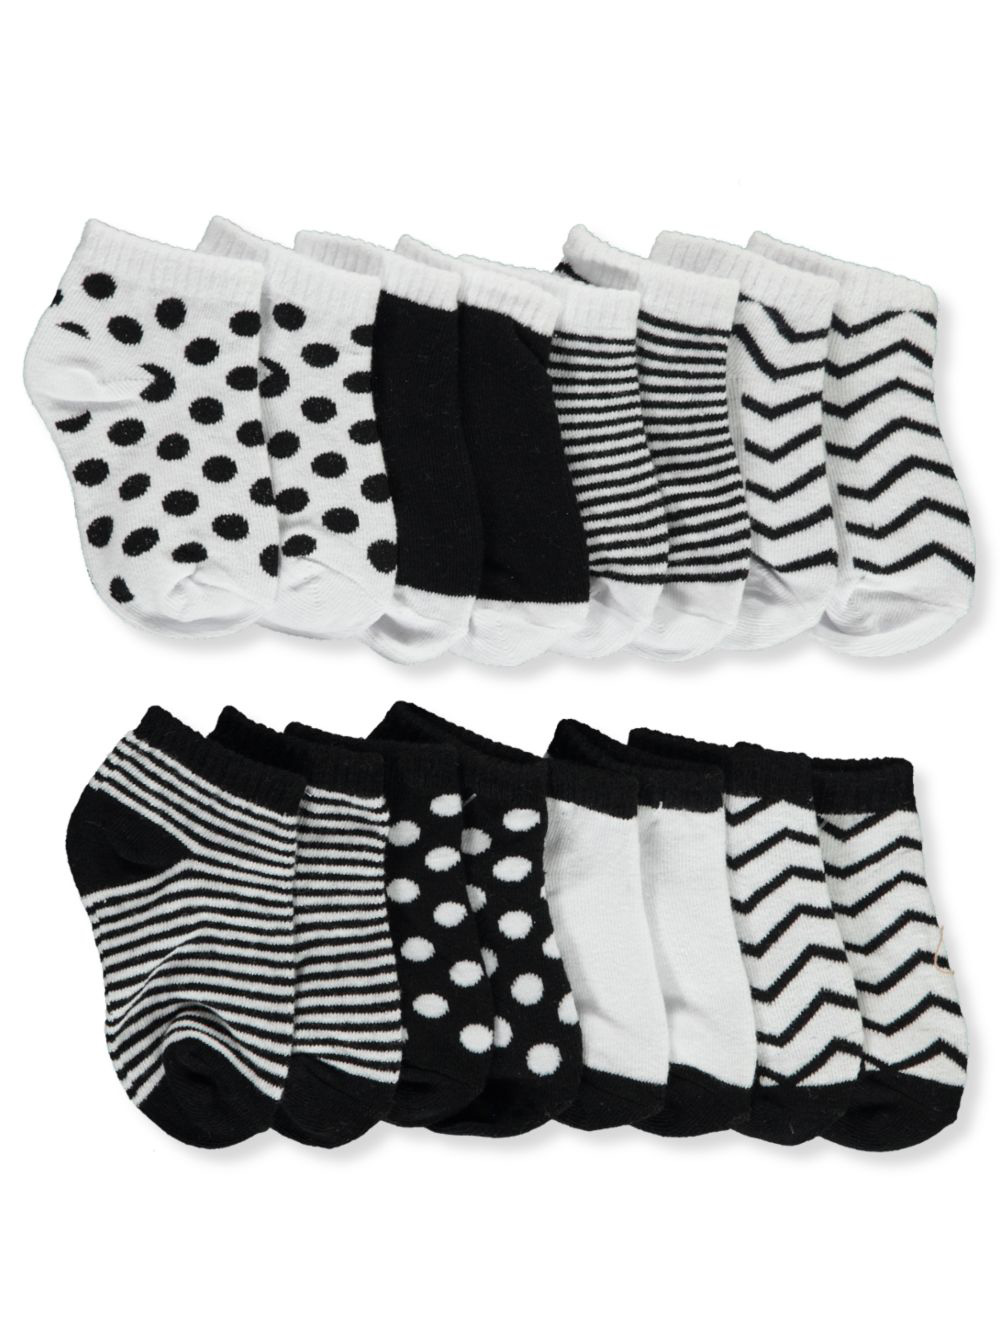 Socks Patterns as Shown